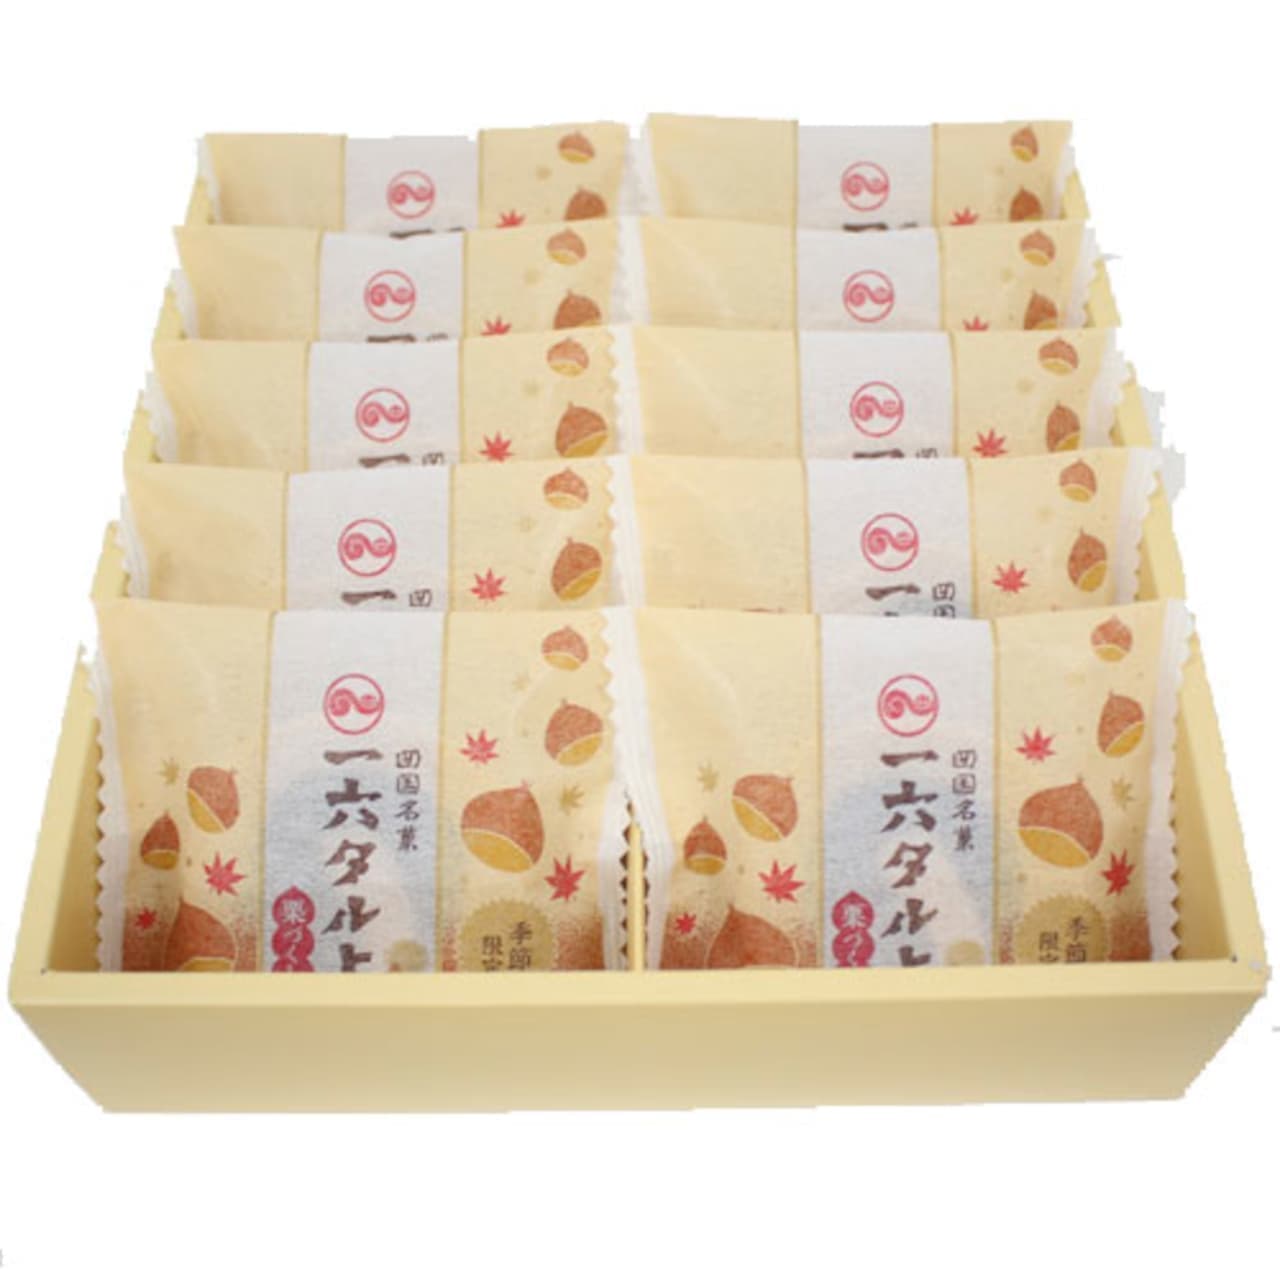 Ichiroku Tart Chestnut Tart" limited edition for fall